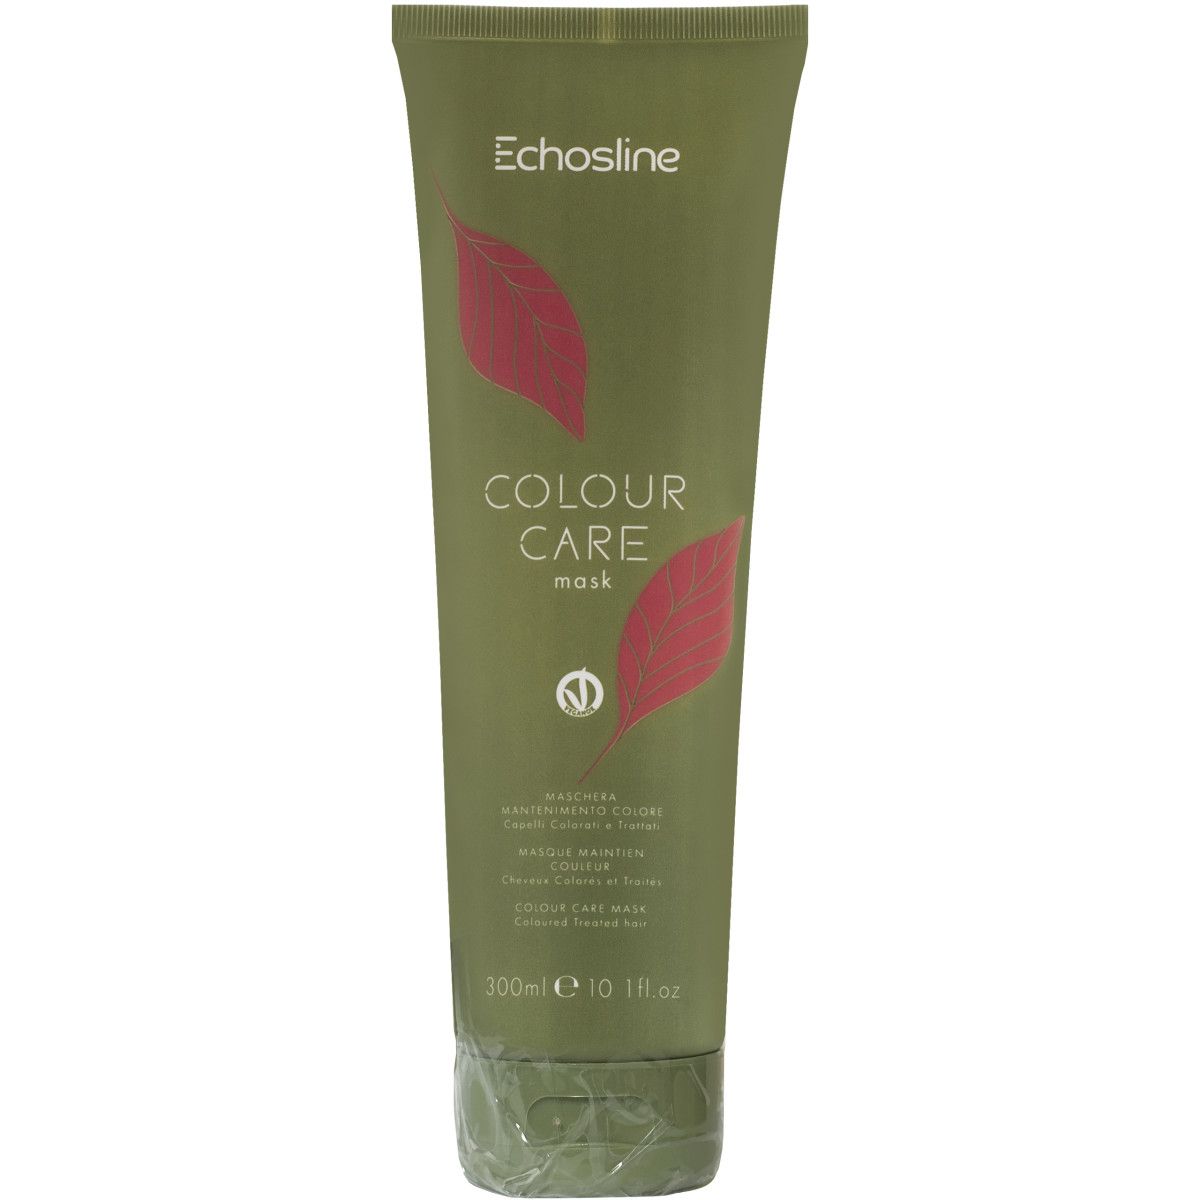 OUTLET ECHOSLINE Colour Care - maska ochraniająca kolor włosów, 300ml